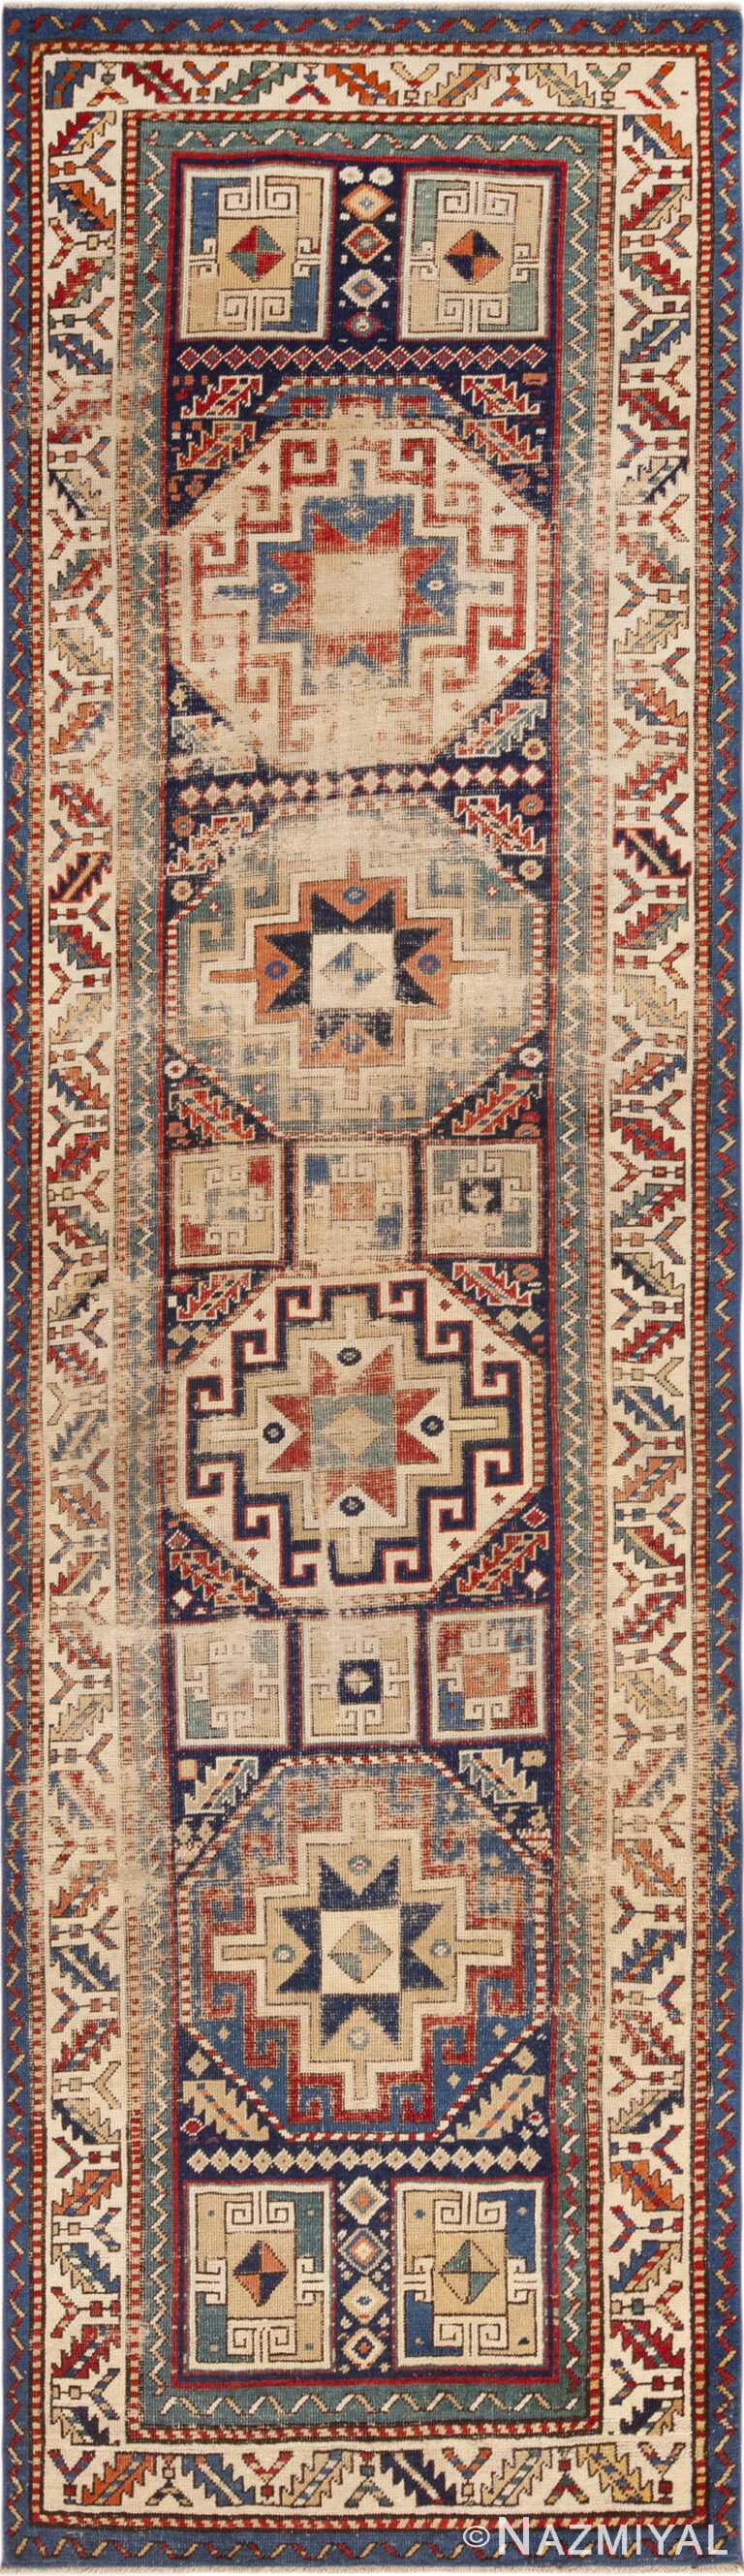 Geometric Antique Caucasian Kazak Tribal Runner Rug 72833 by Nazmiyal Antique Rugs